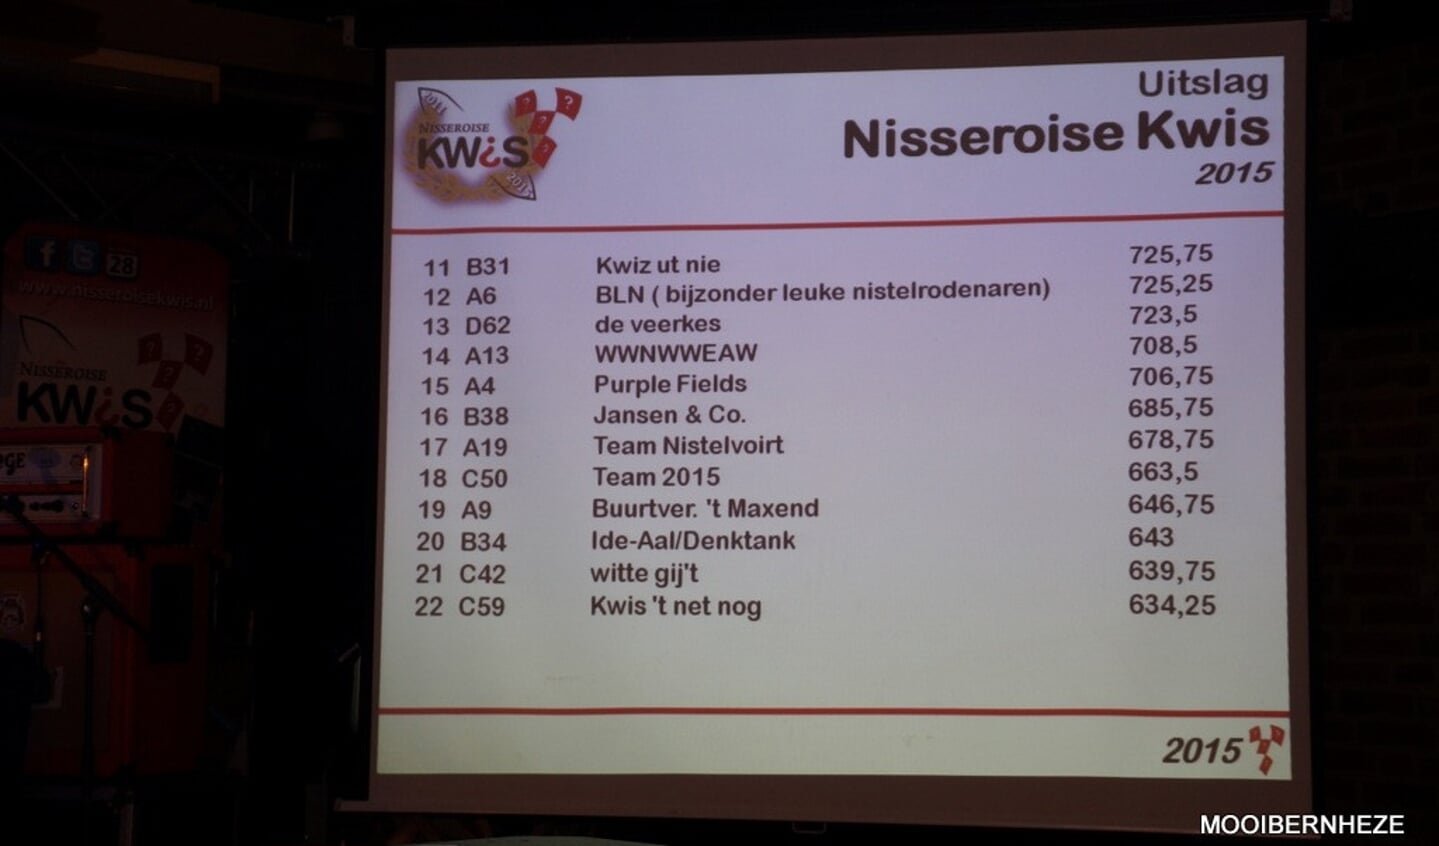 Nistelrode - Uitslag Nisseroise Kwis